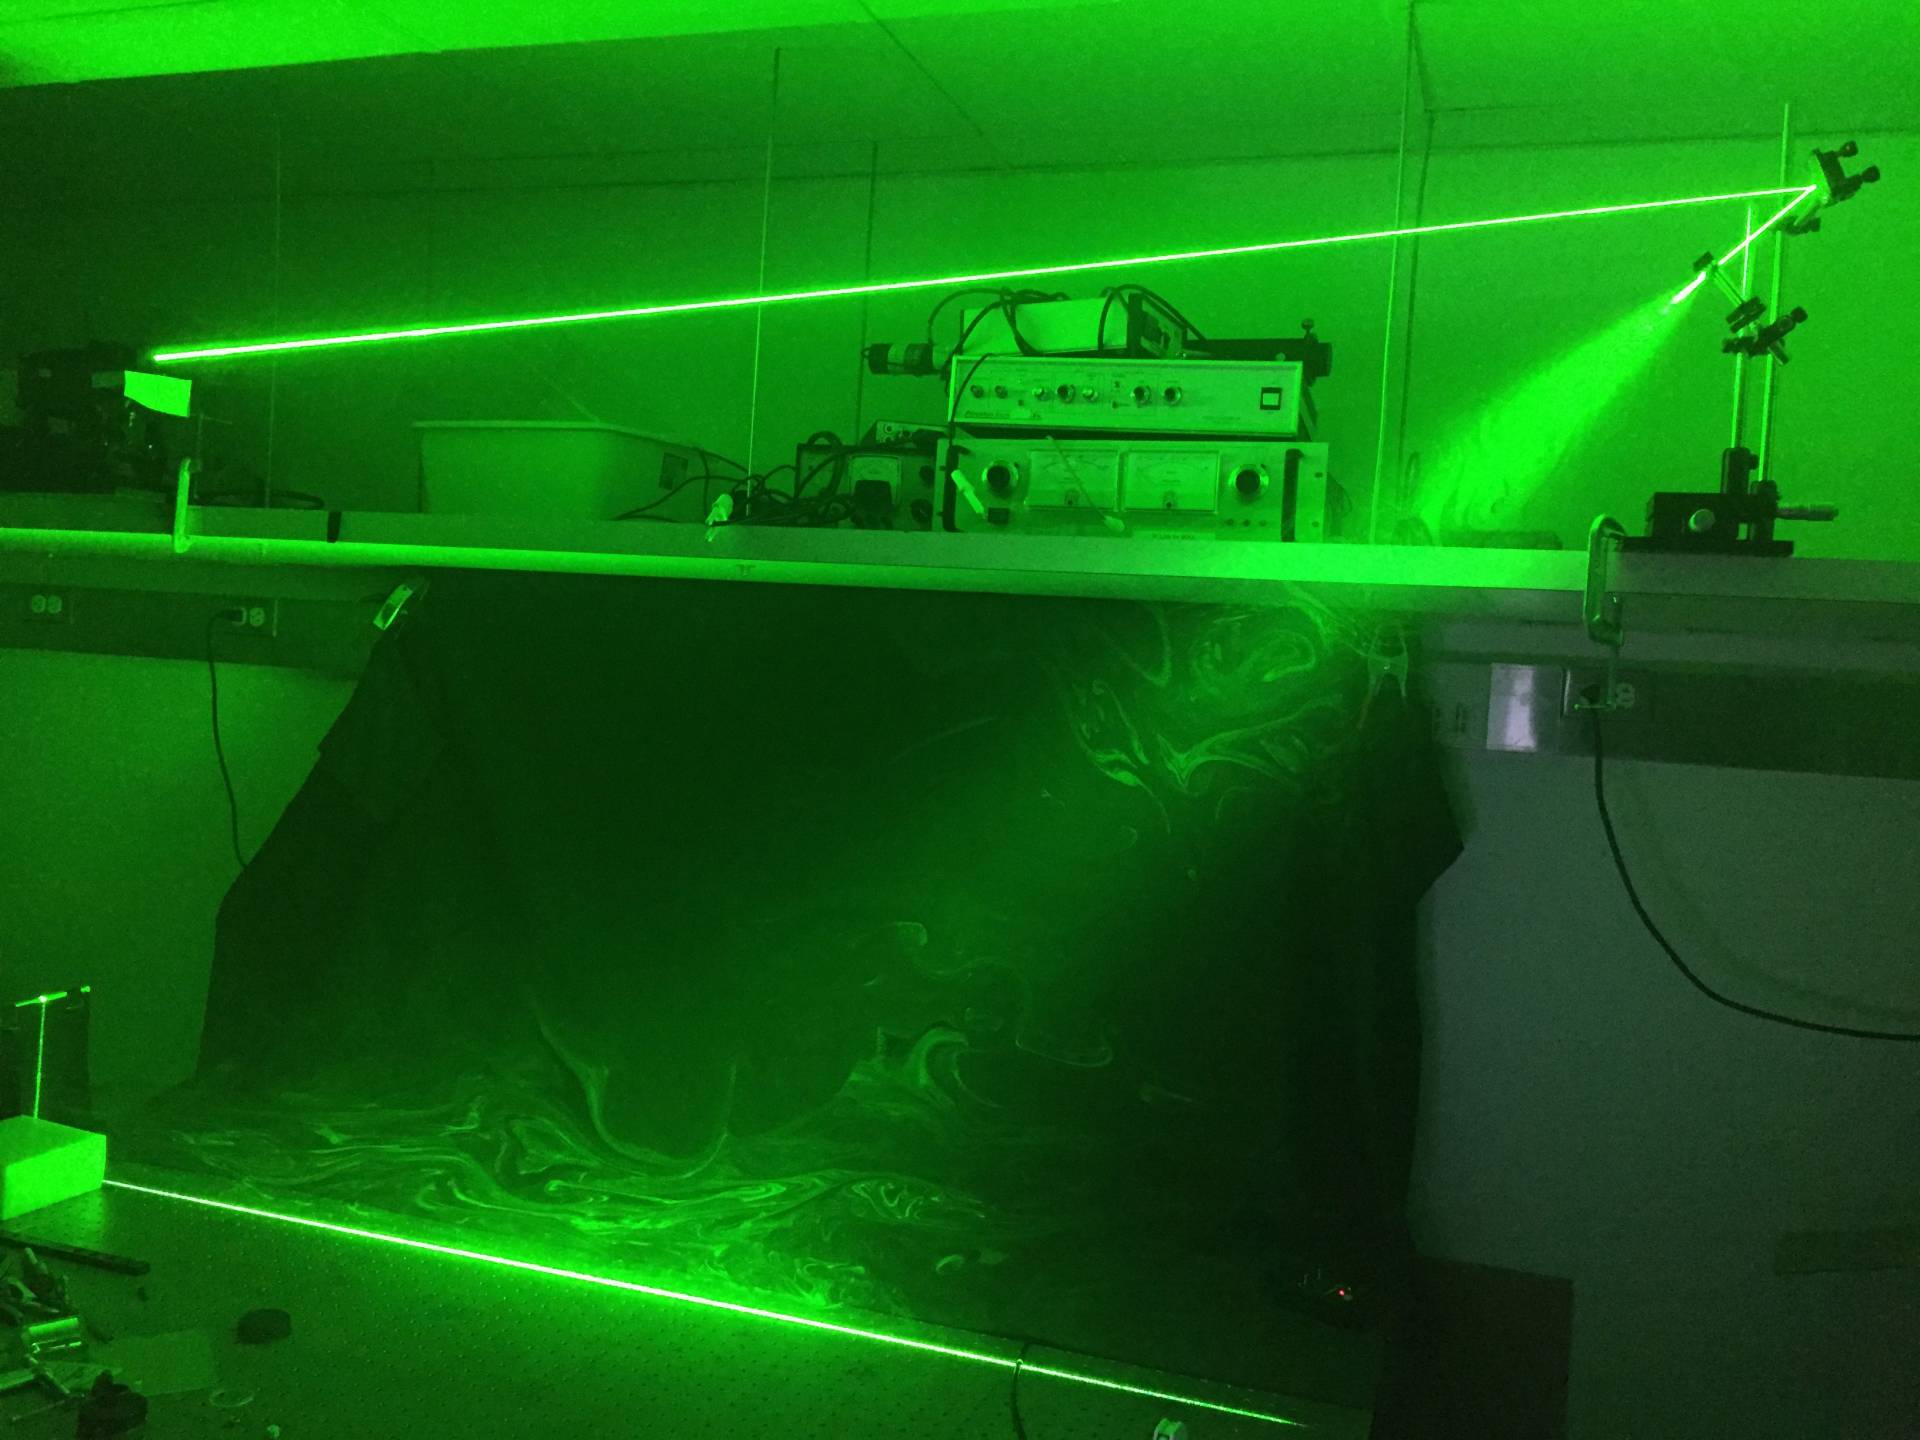 Laser set up used in lab